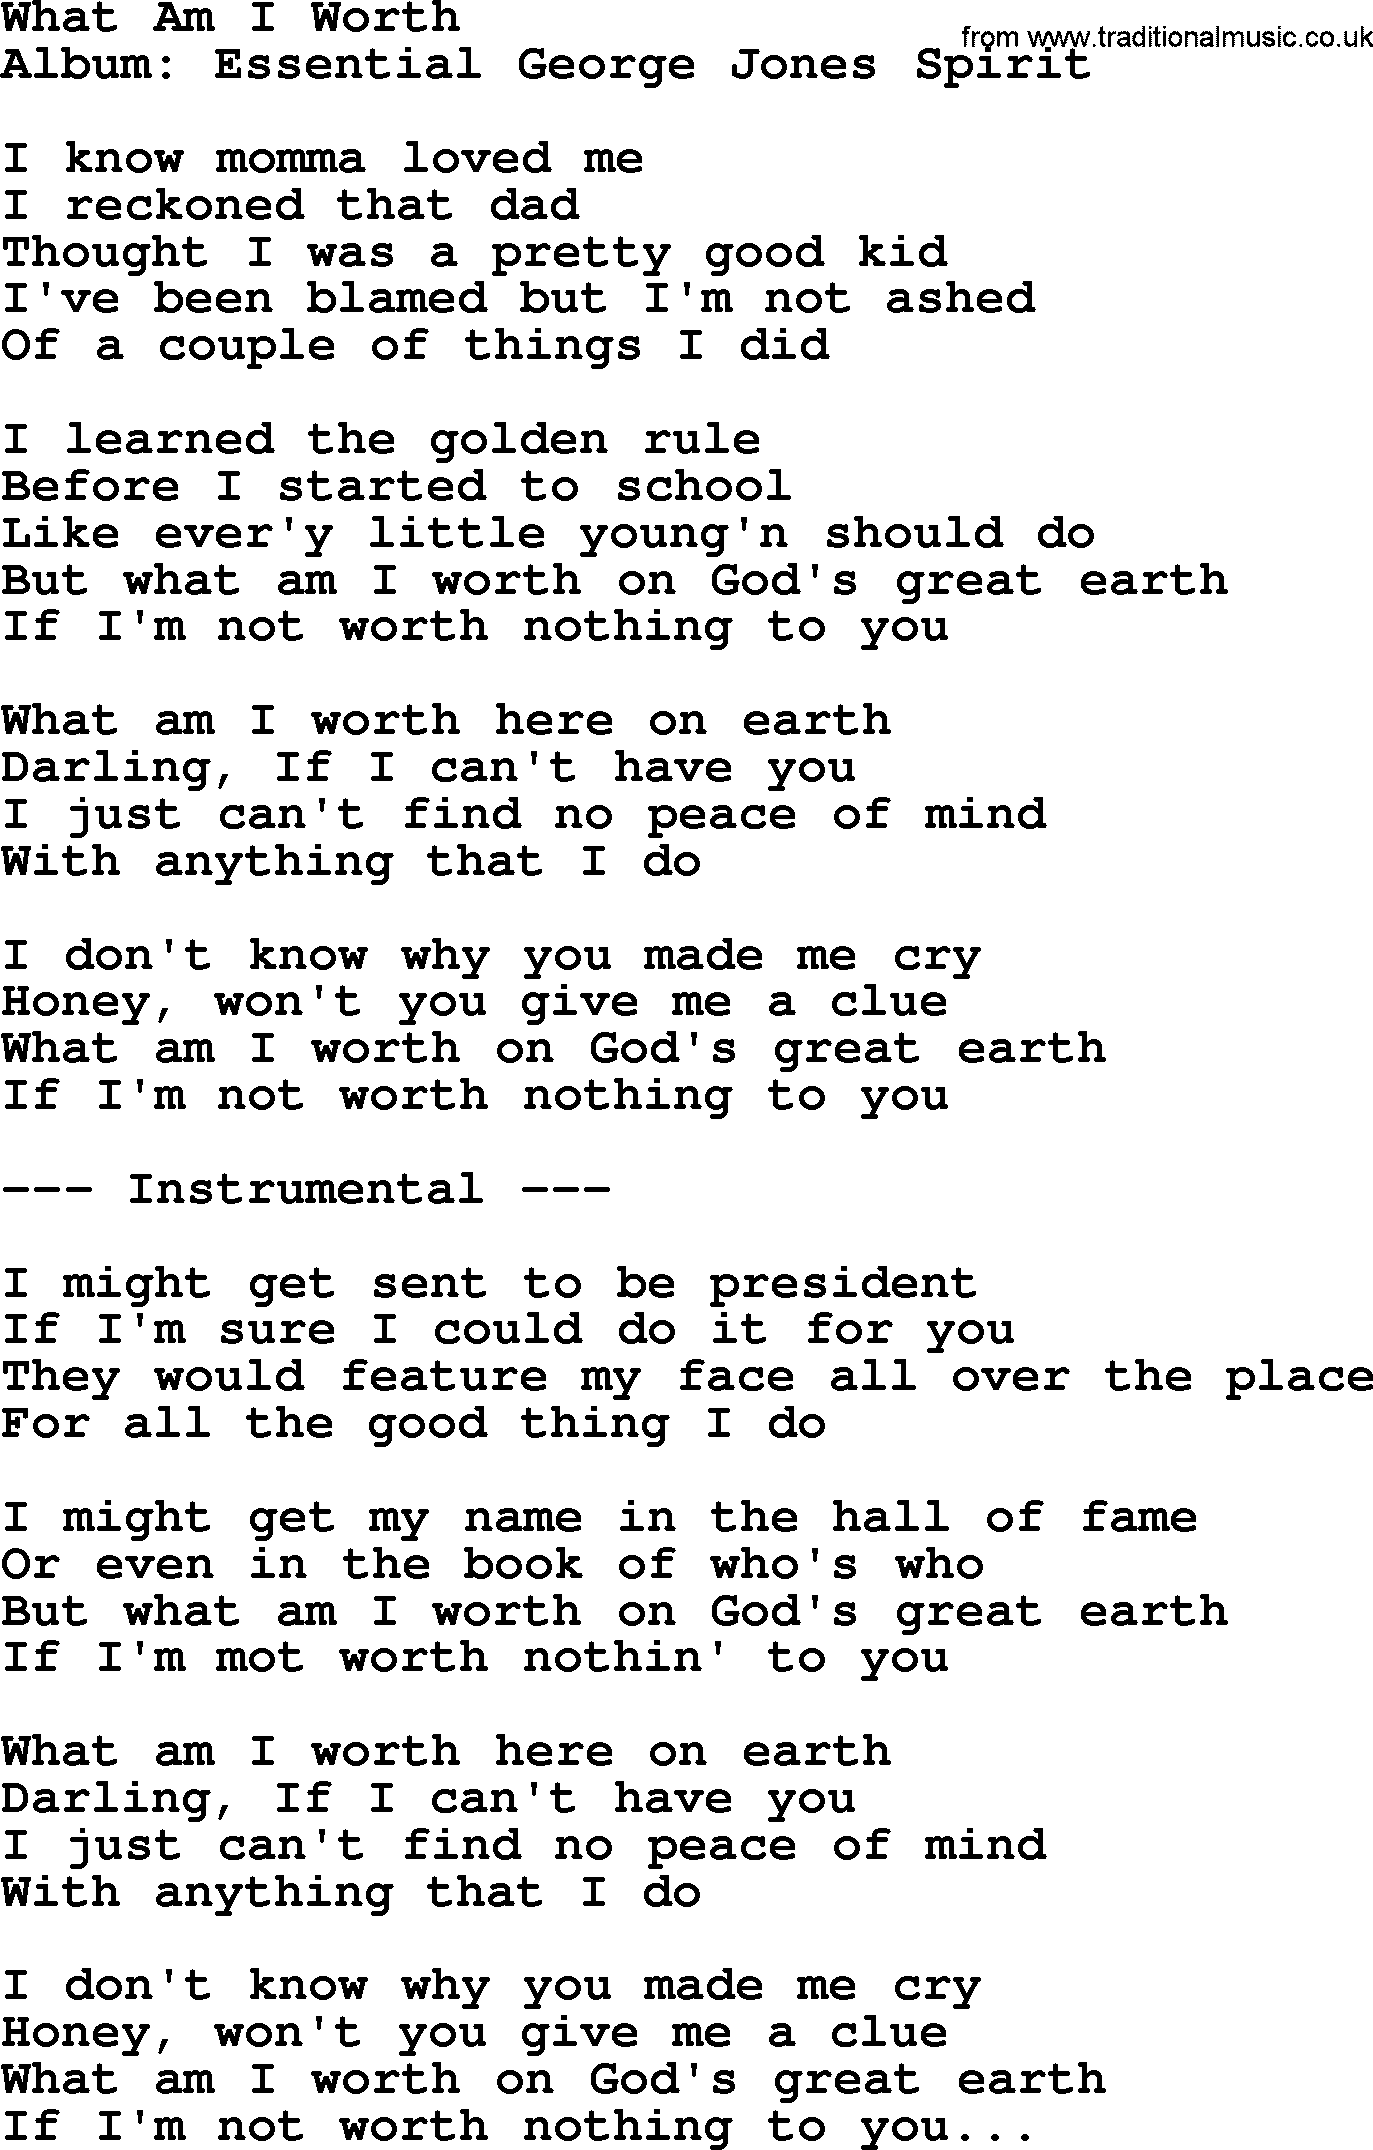 George Jones song: What Am I Worth, lyrics